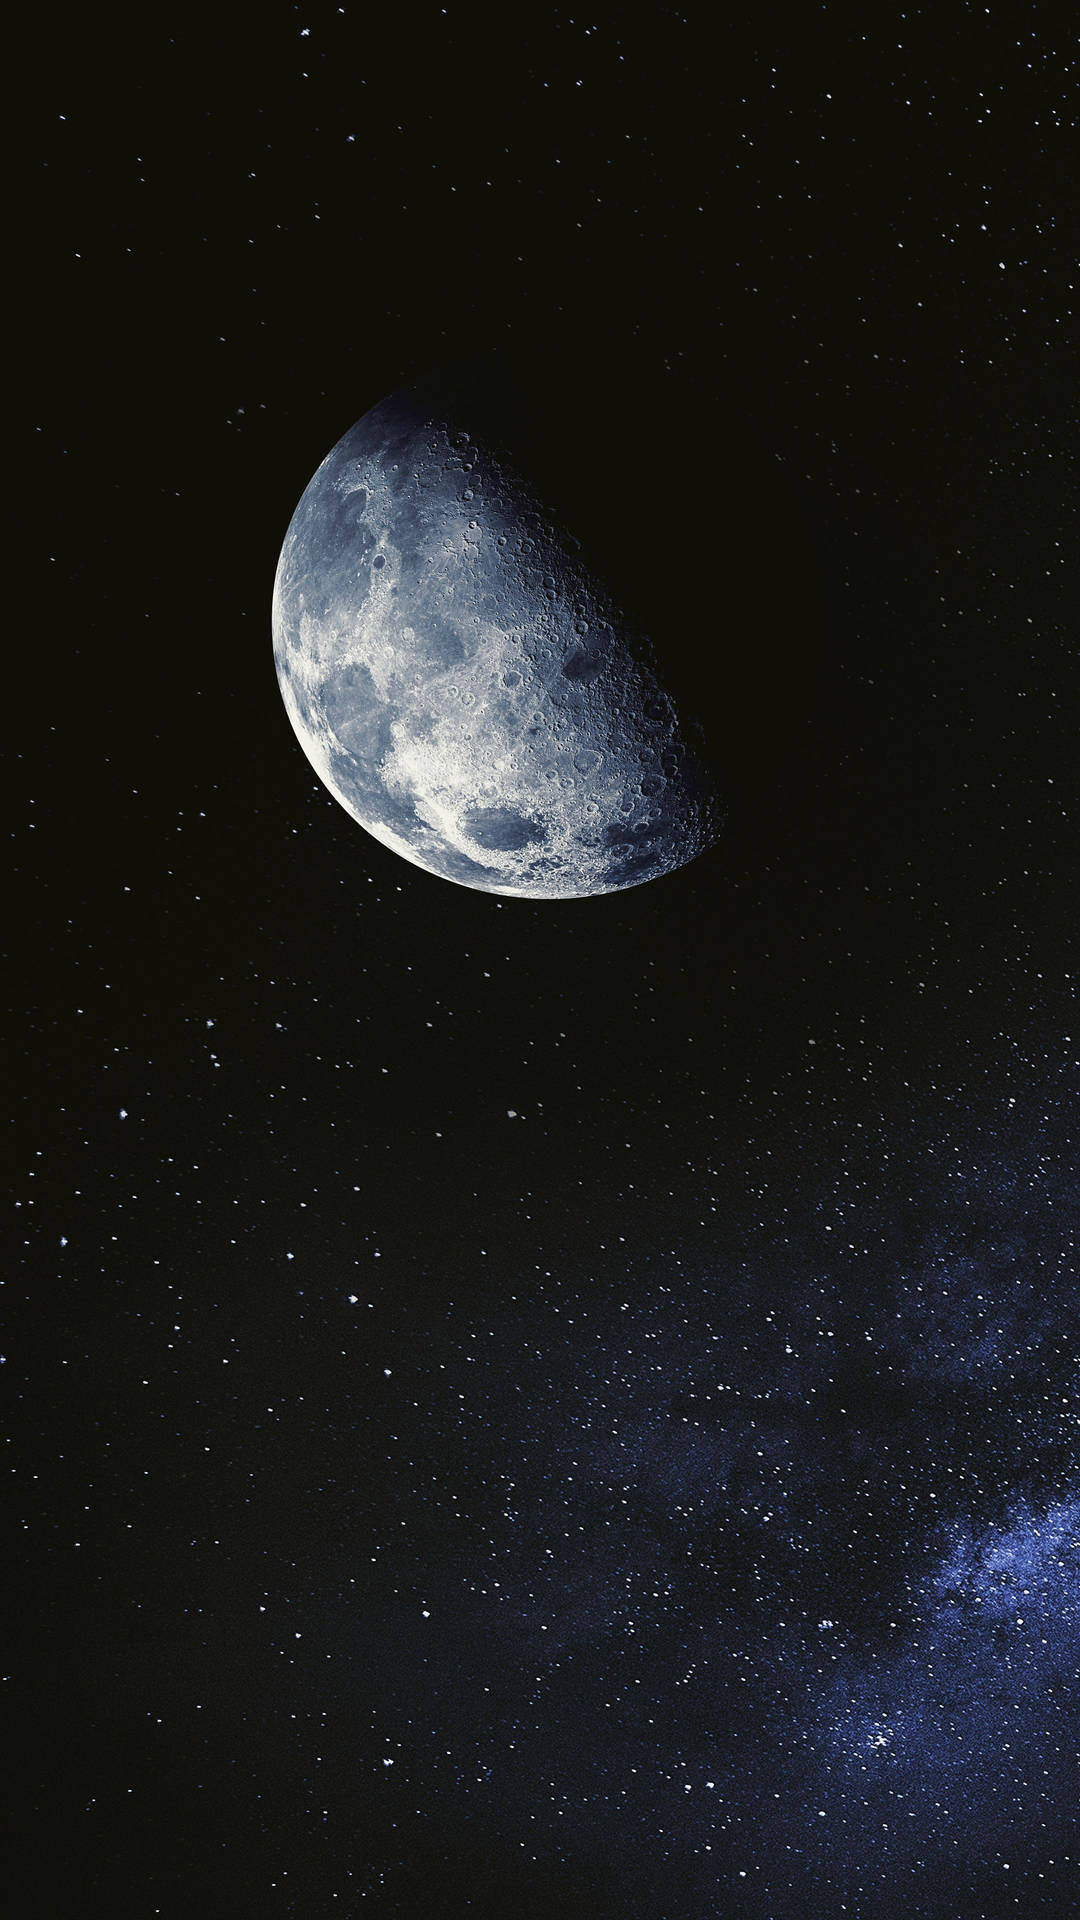 Enigmatic Half Moon Shining in the Dark Sky - 4K Ultra HD Wallpaper for Phones Wallpaper